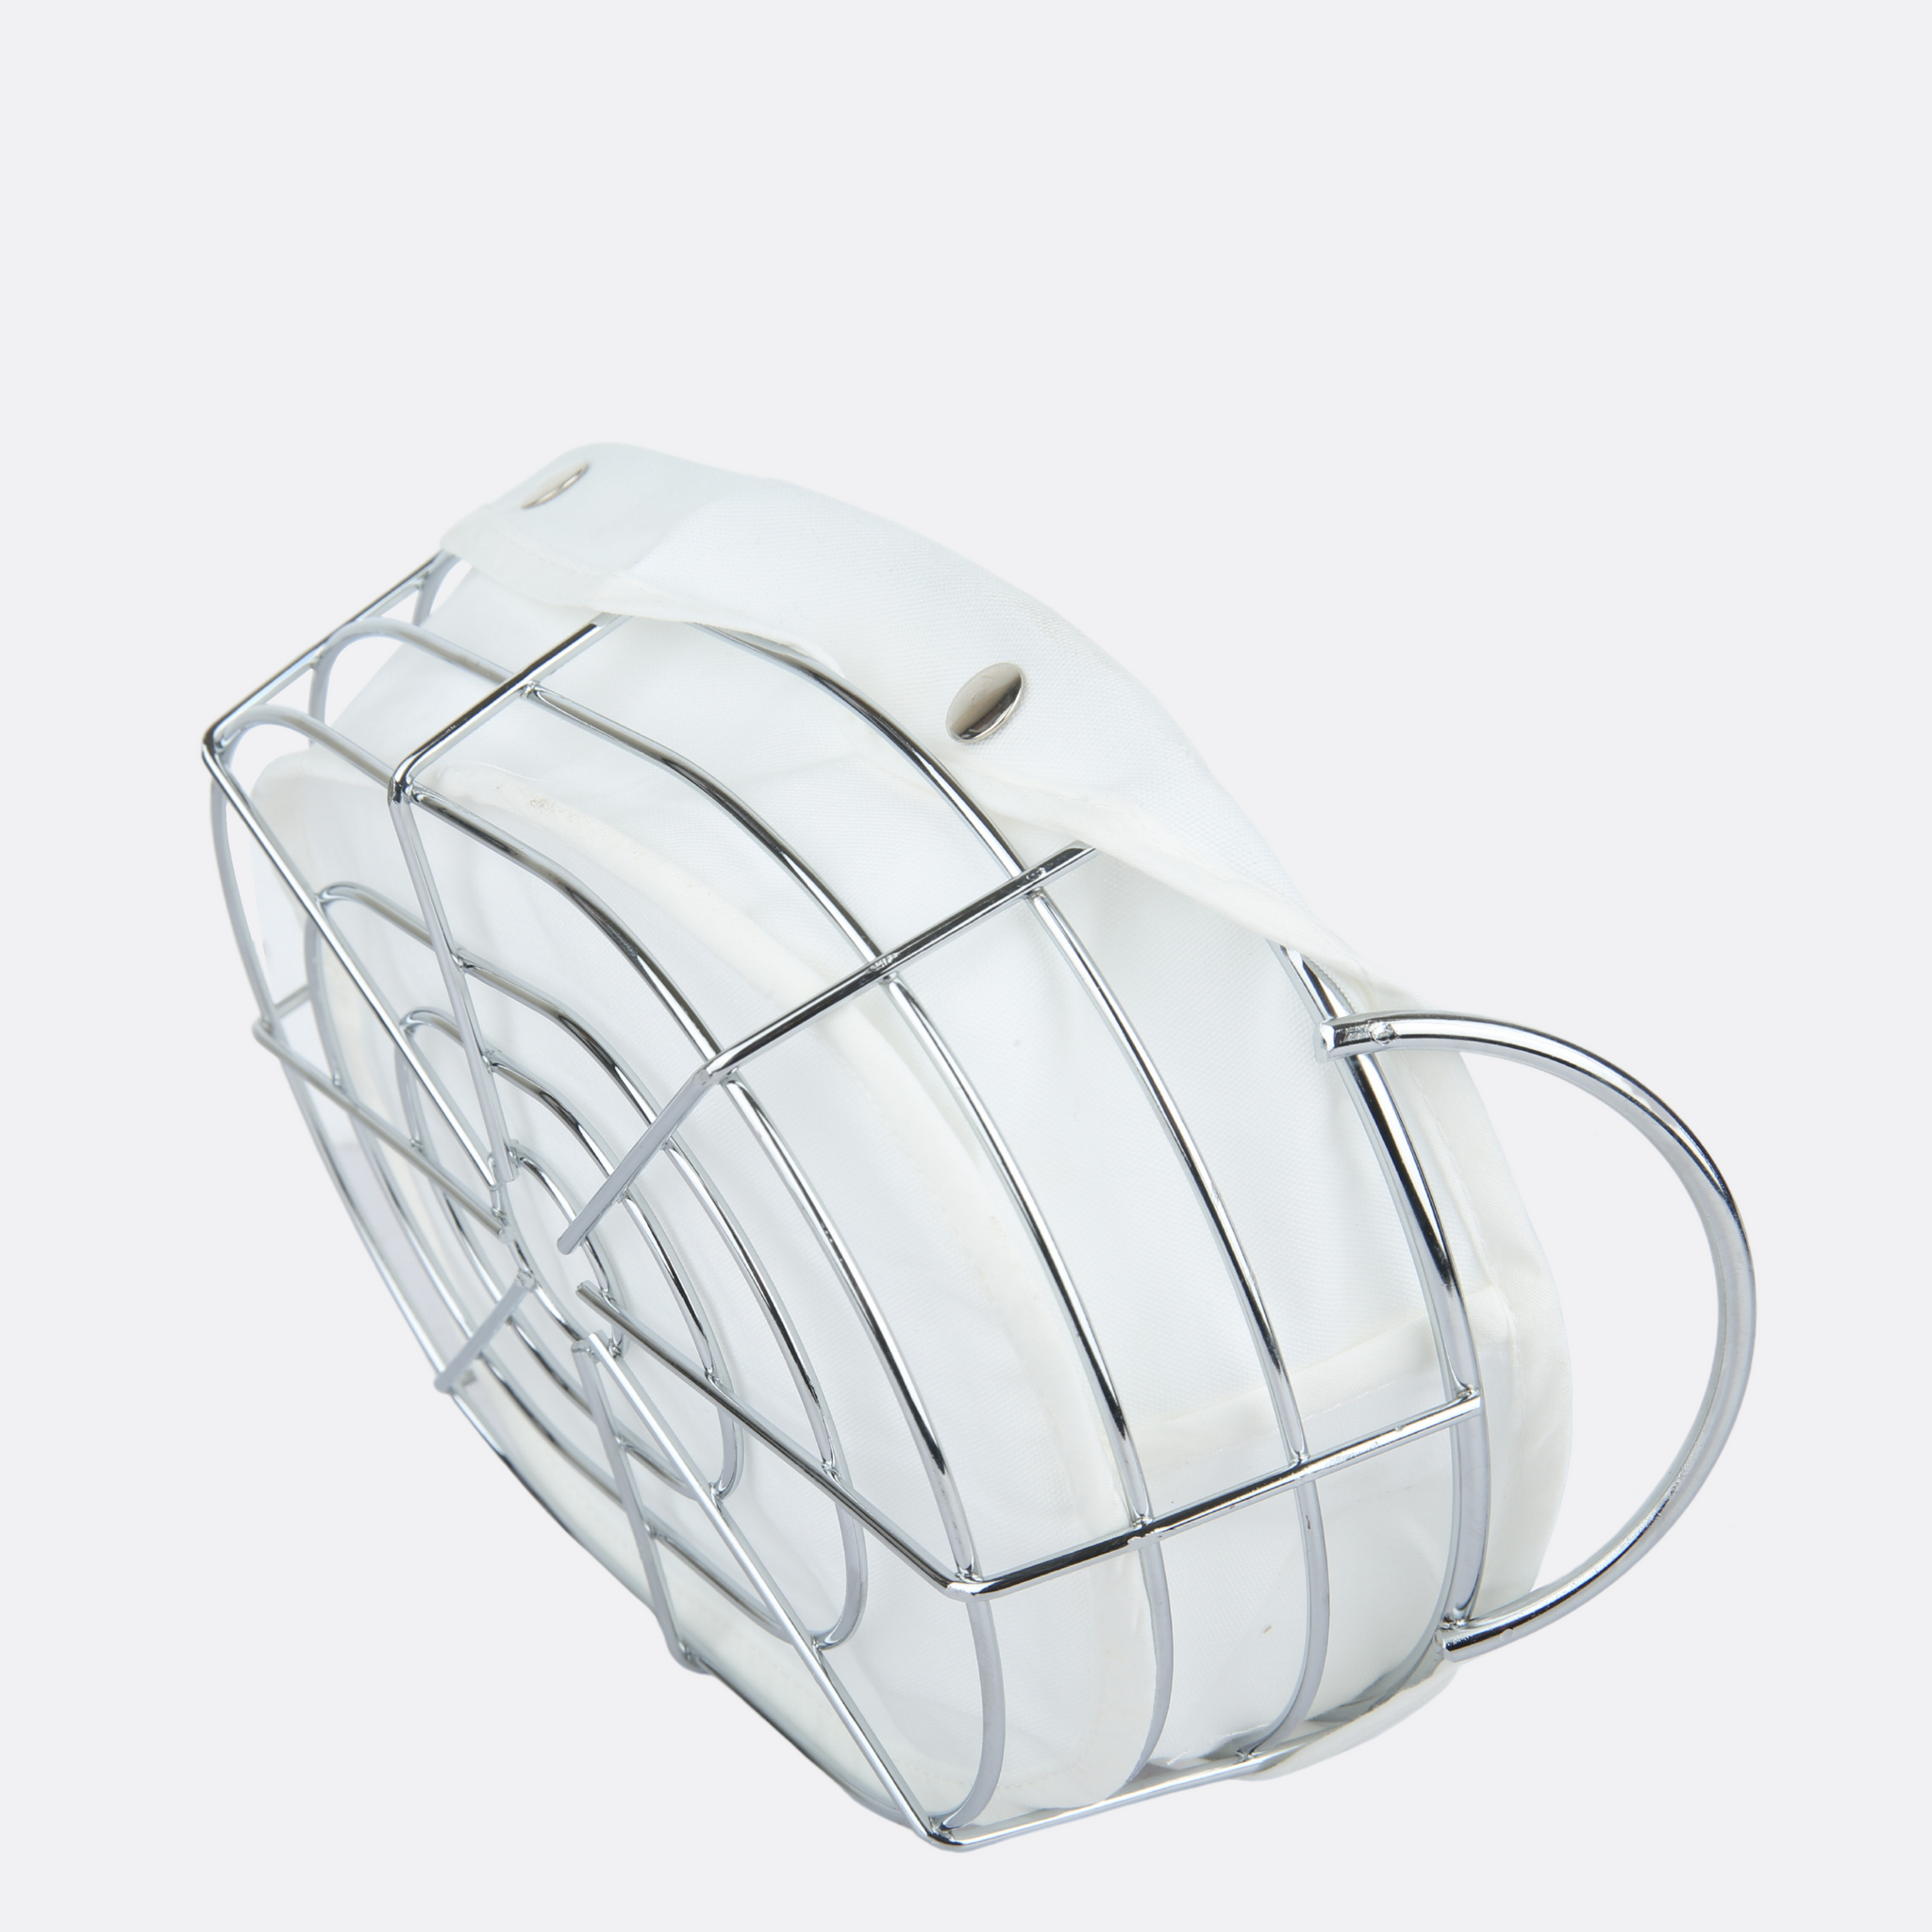 Metallic Bread Basket